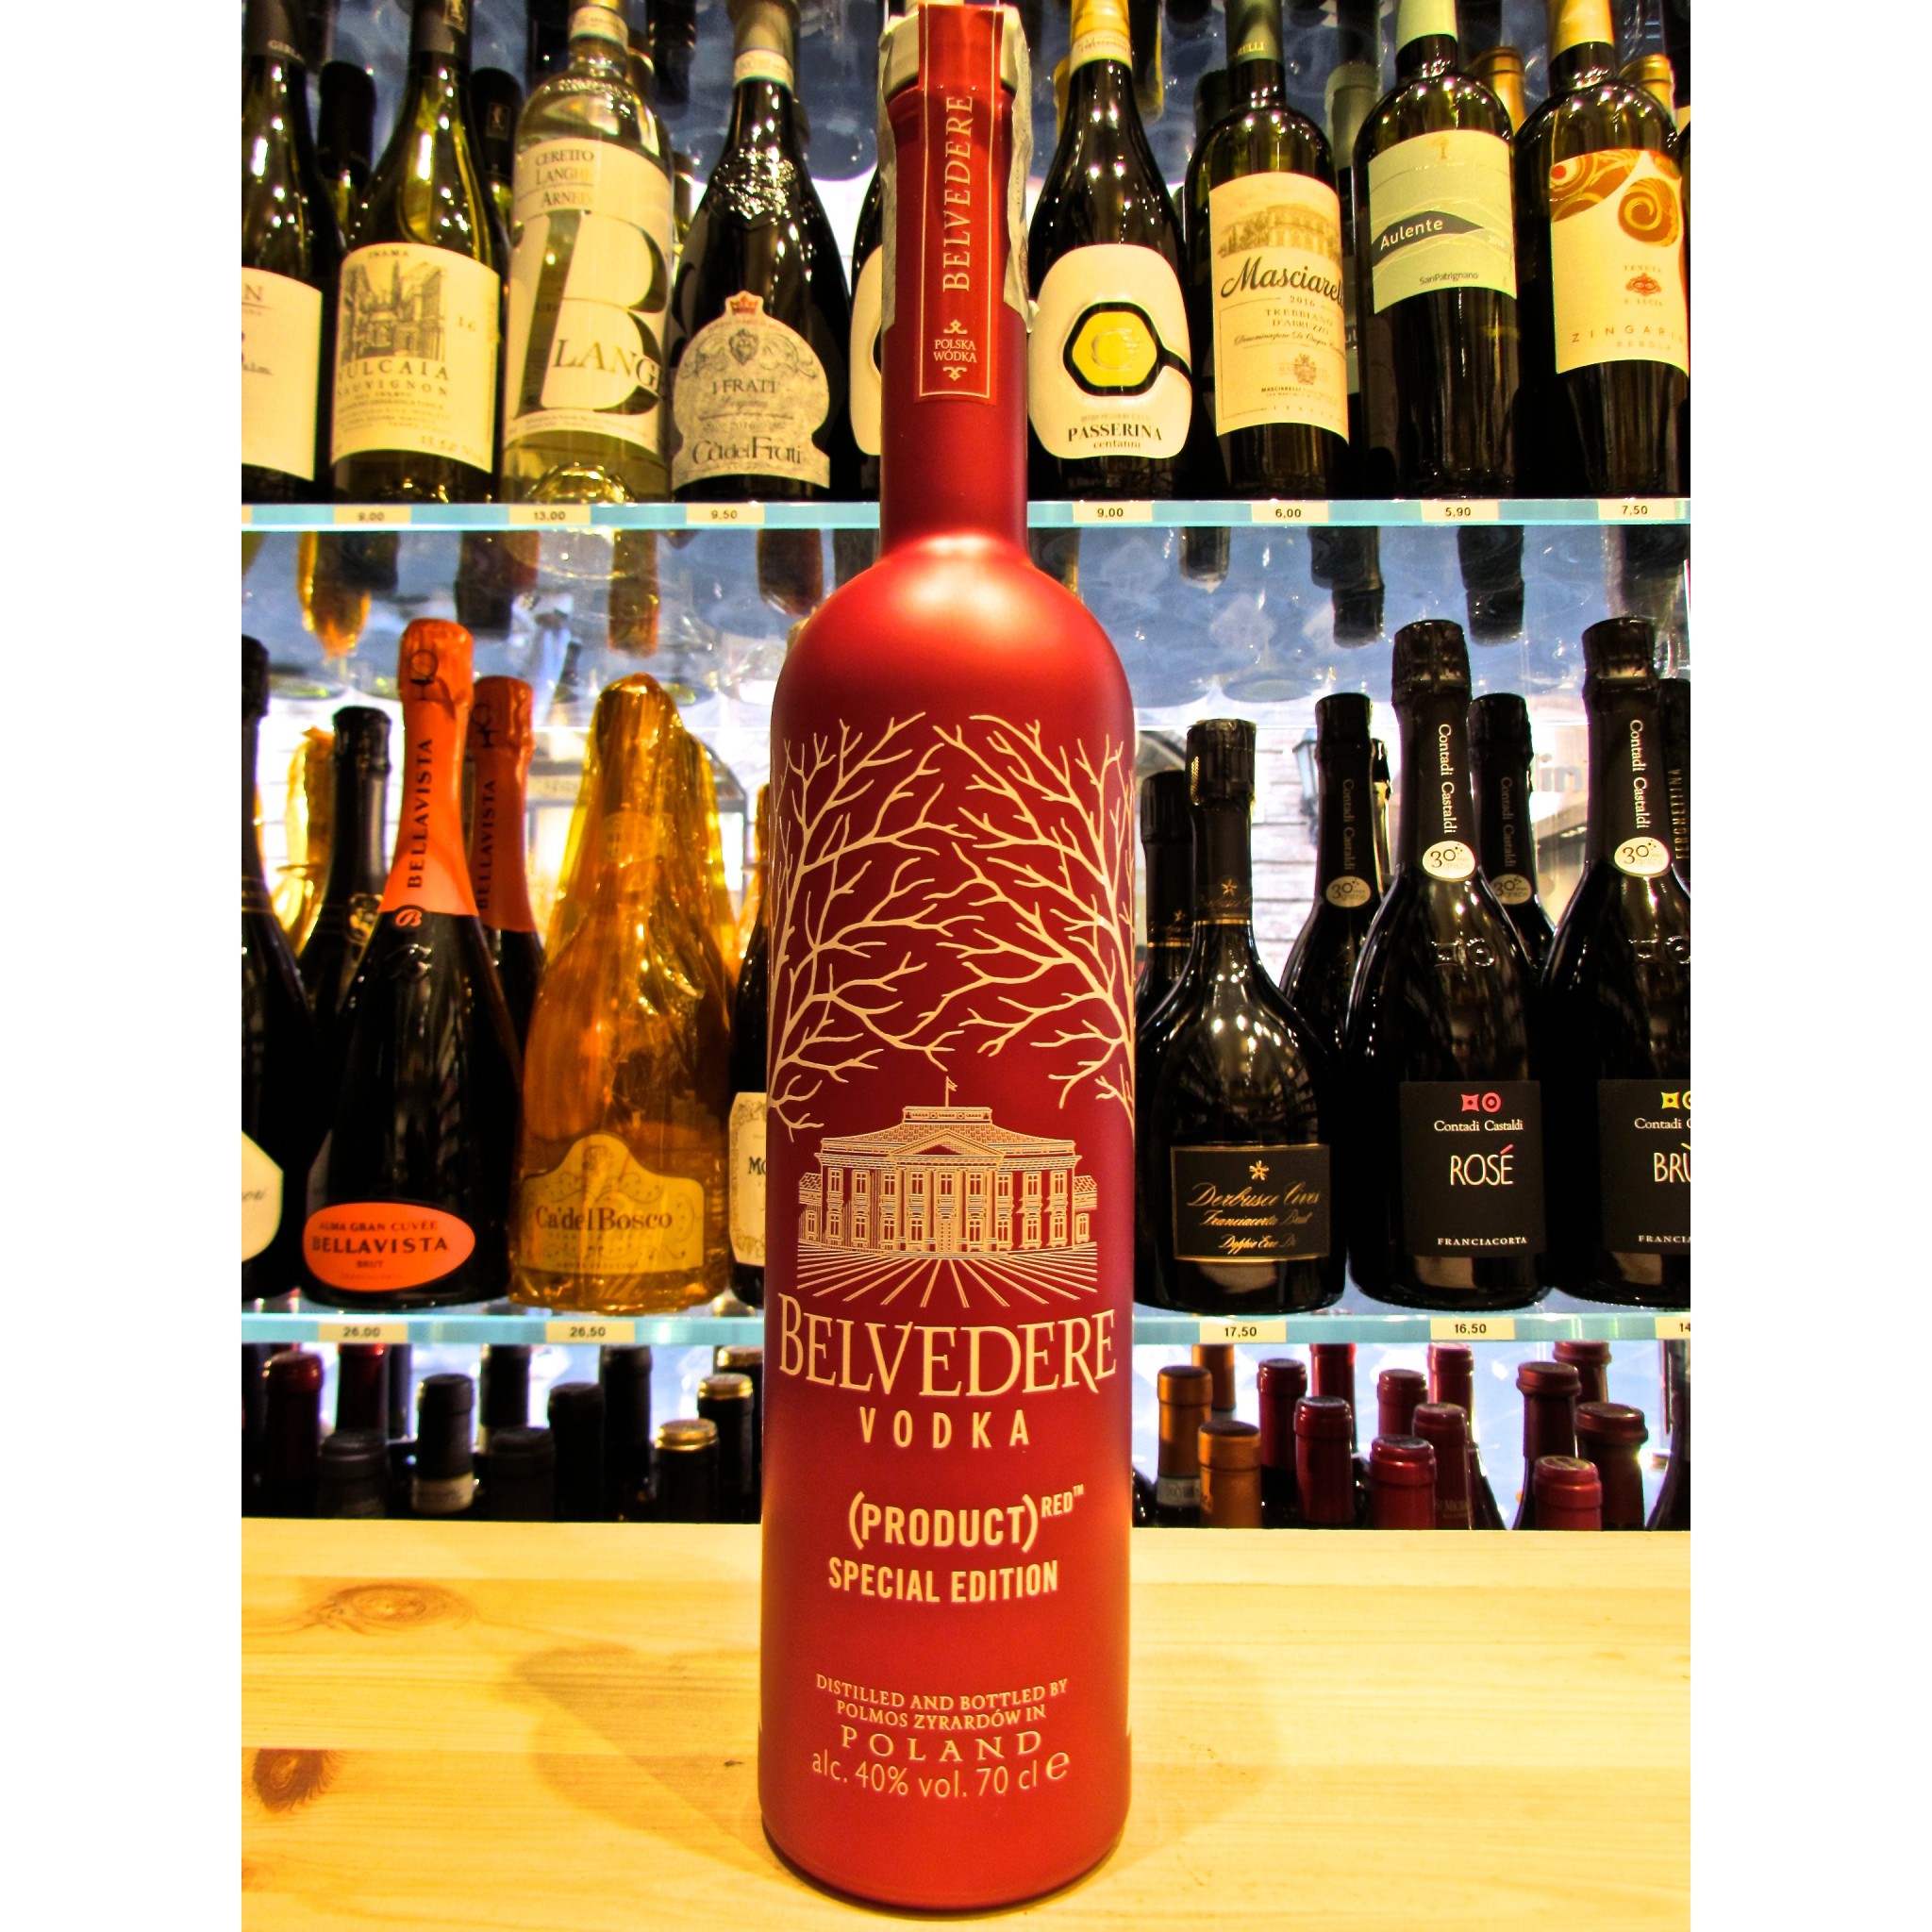 Belvedere Vodka — Happy Hour Wine & Spirits